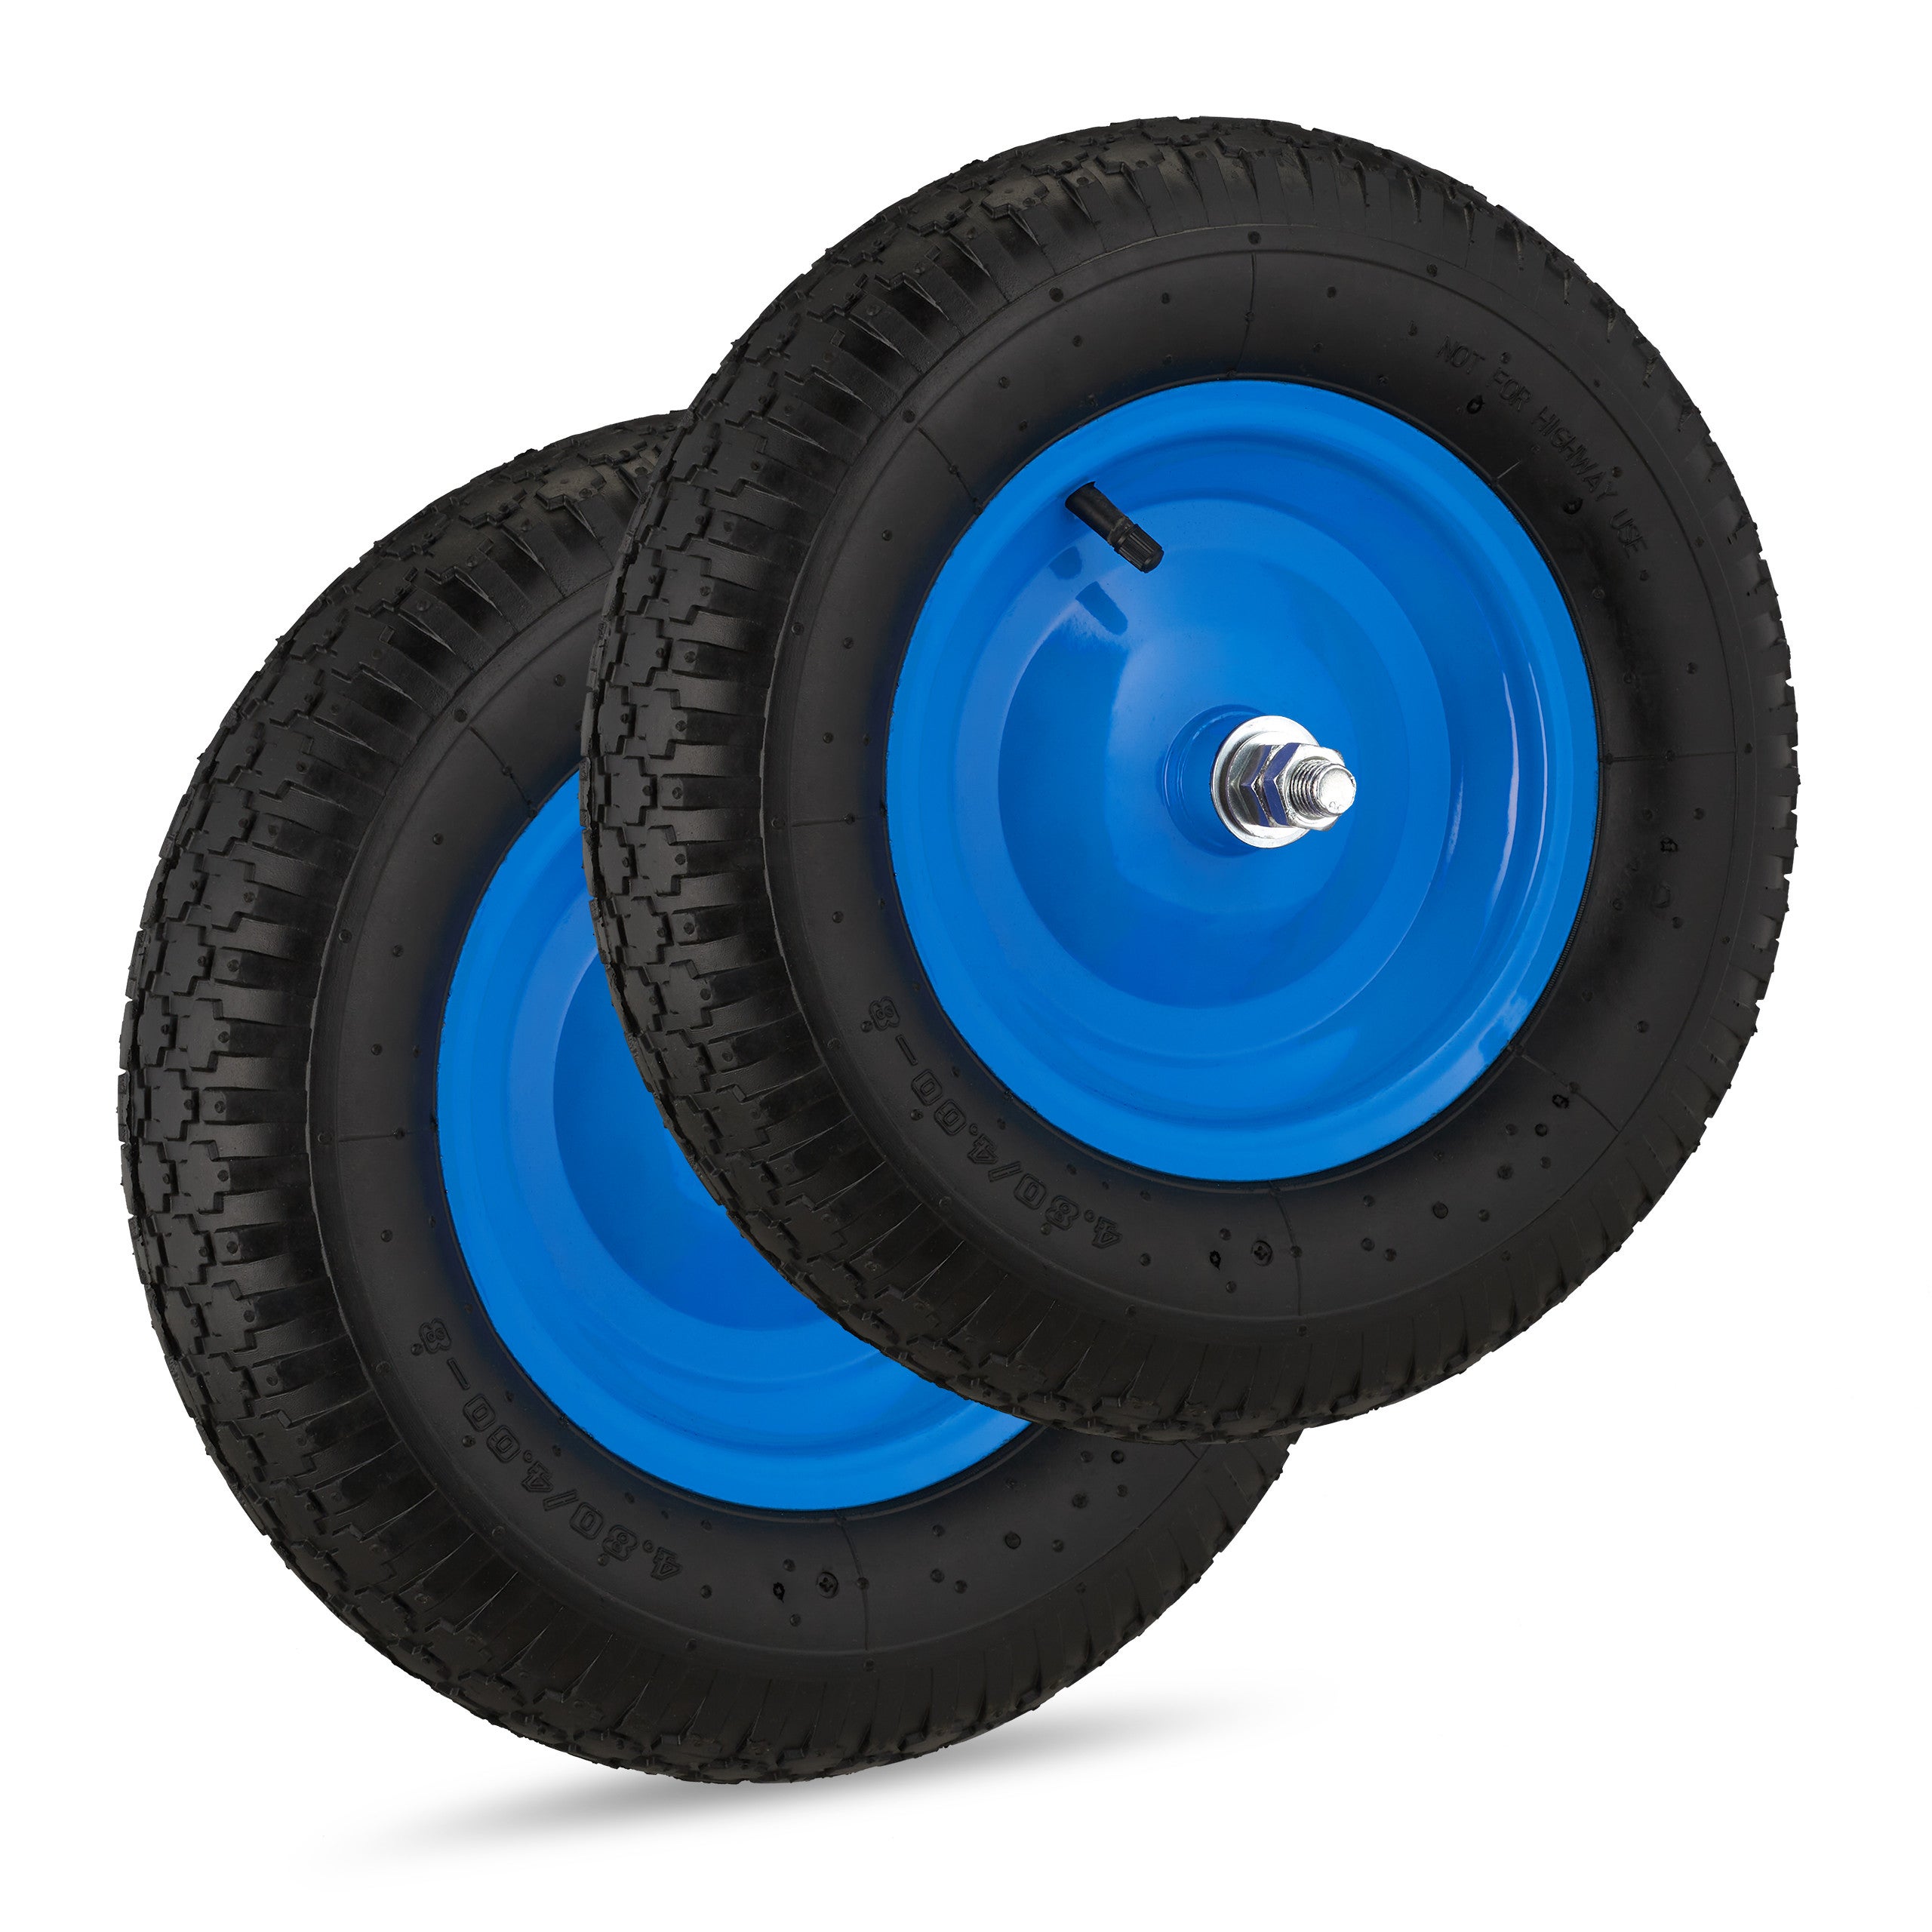 2x roue brouette solide pneu gomme plein bleu pu 4.80 / 4.00-8 390mm + axe  299090584 - Conforama